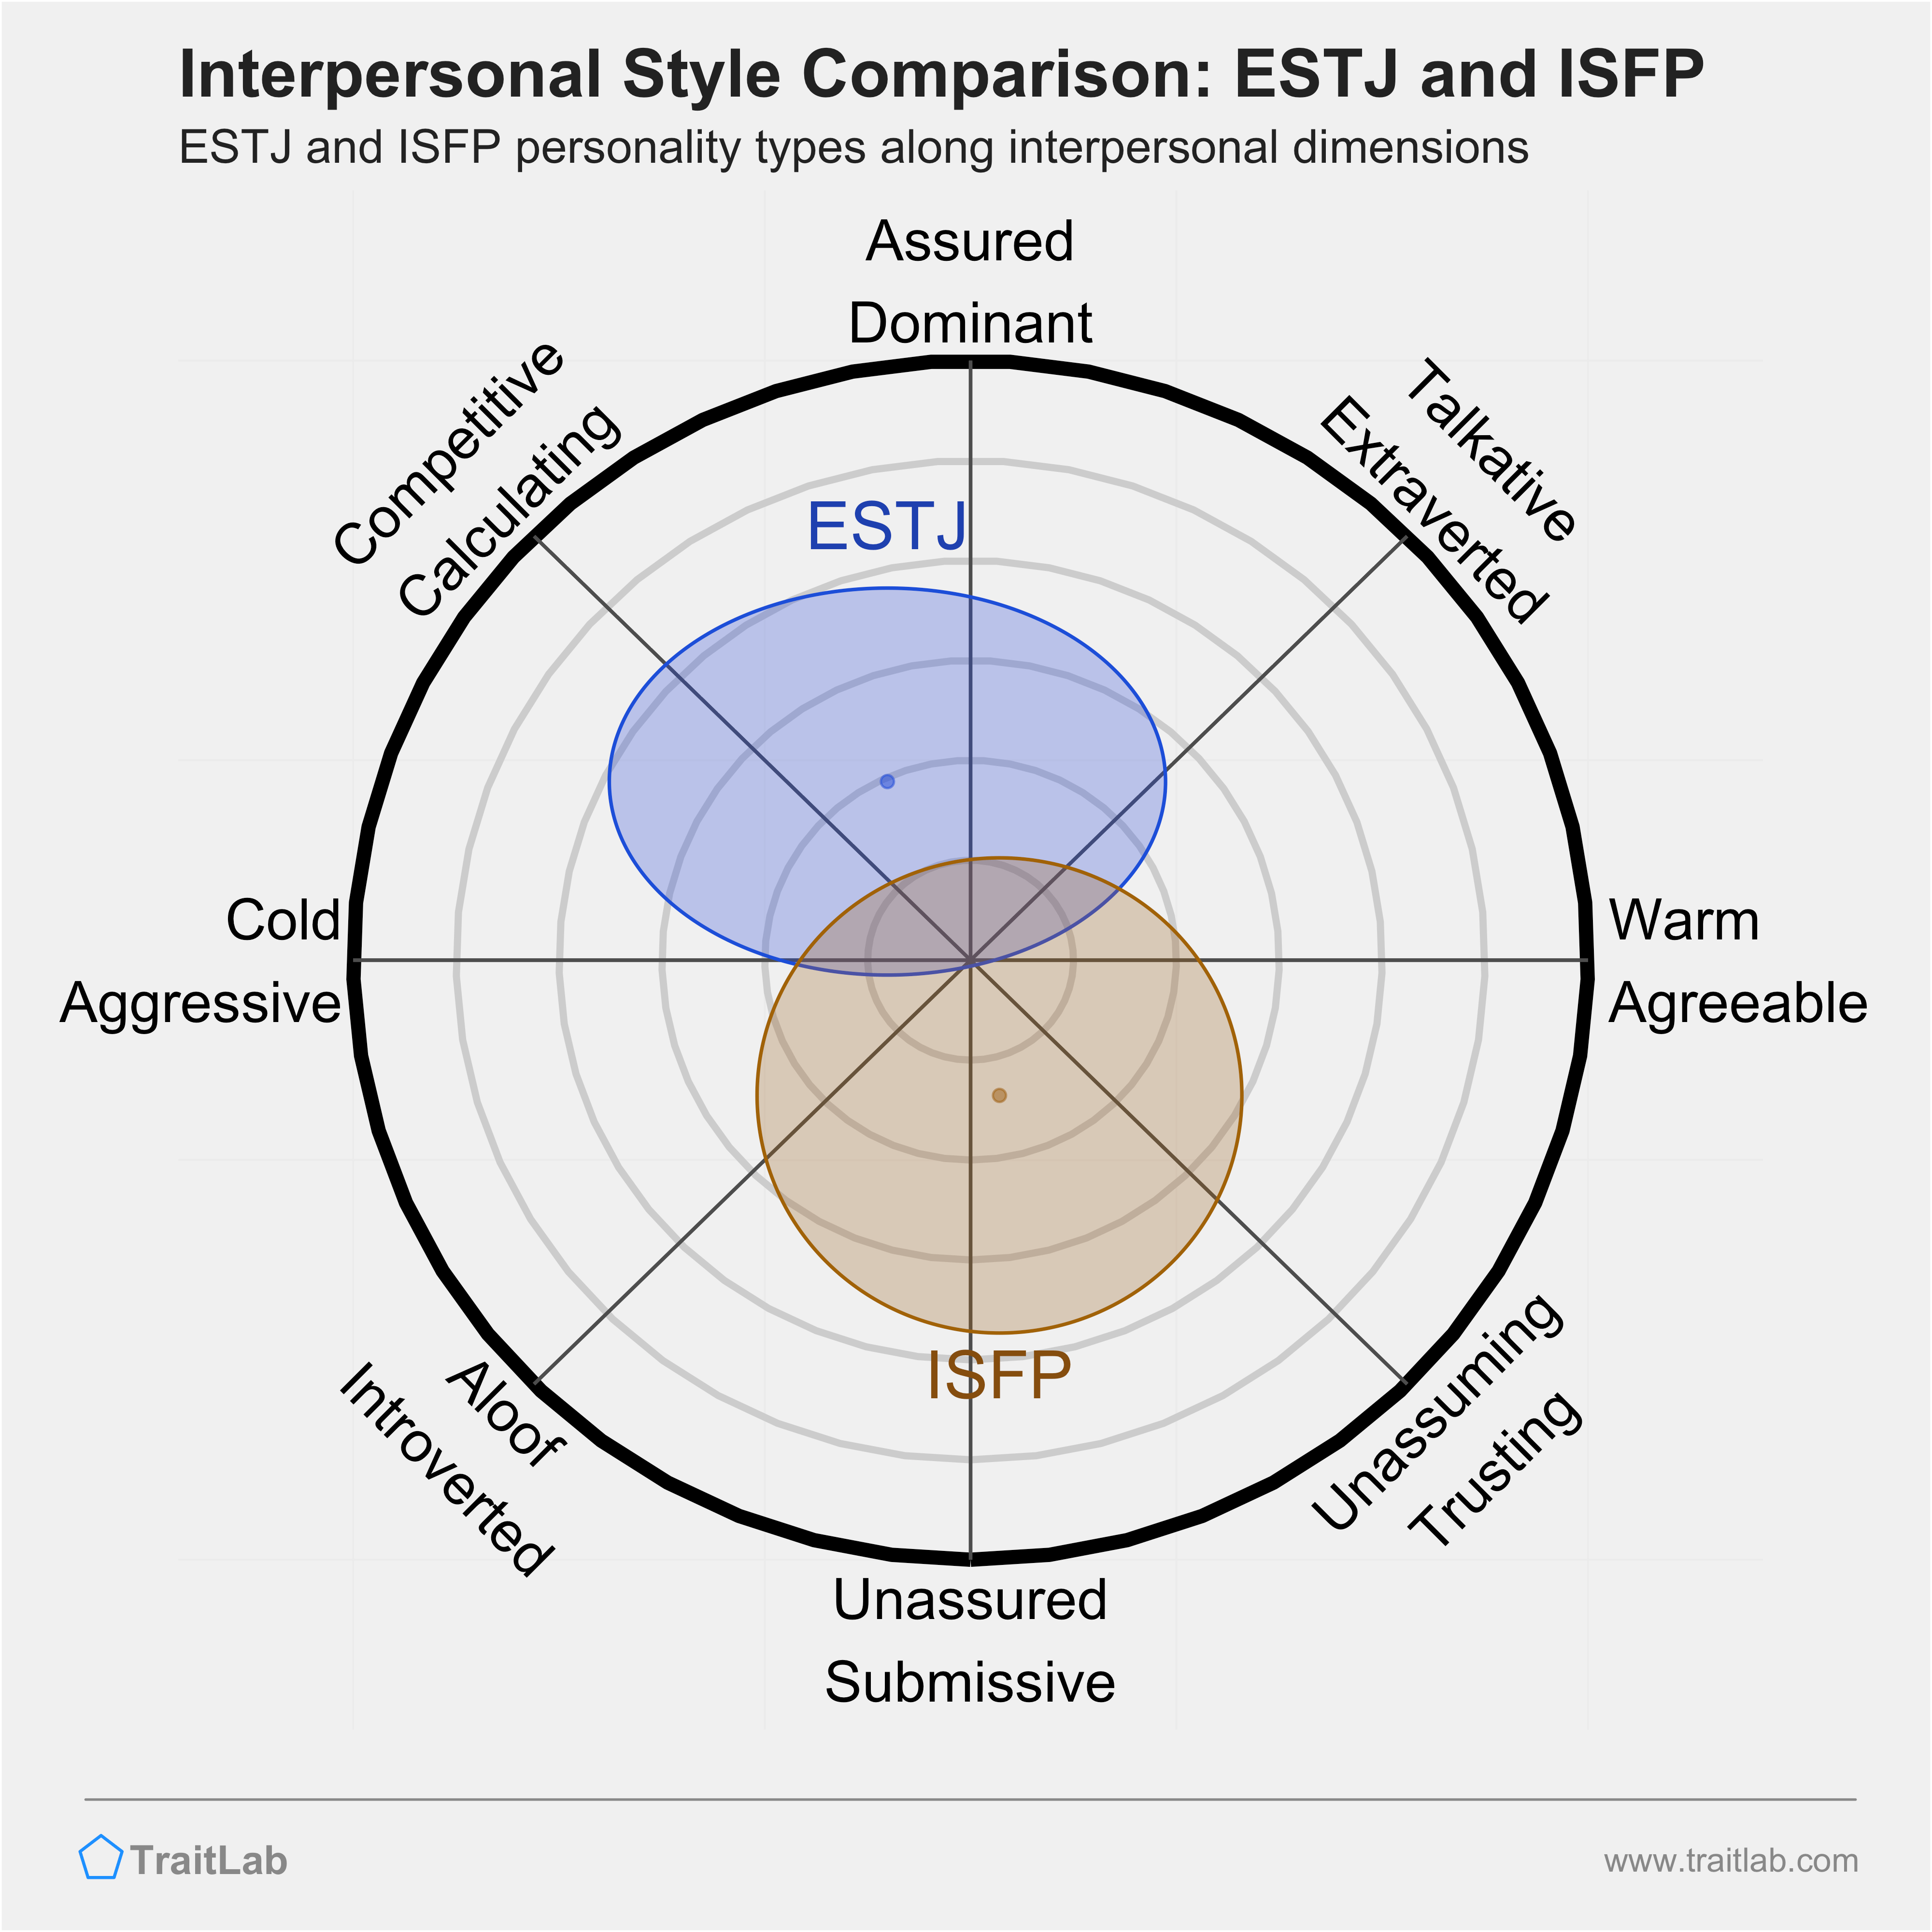 ESTJ and ISFP comparison across interpersonal dimensions